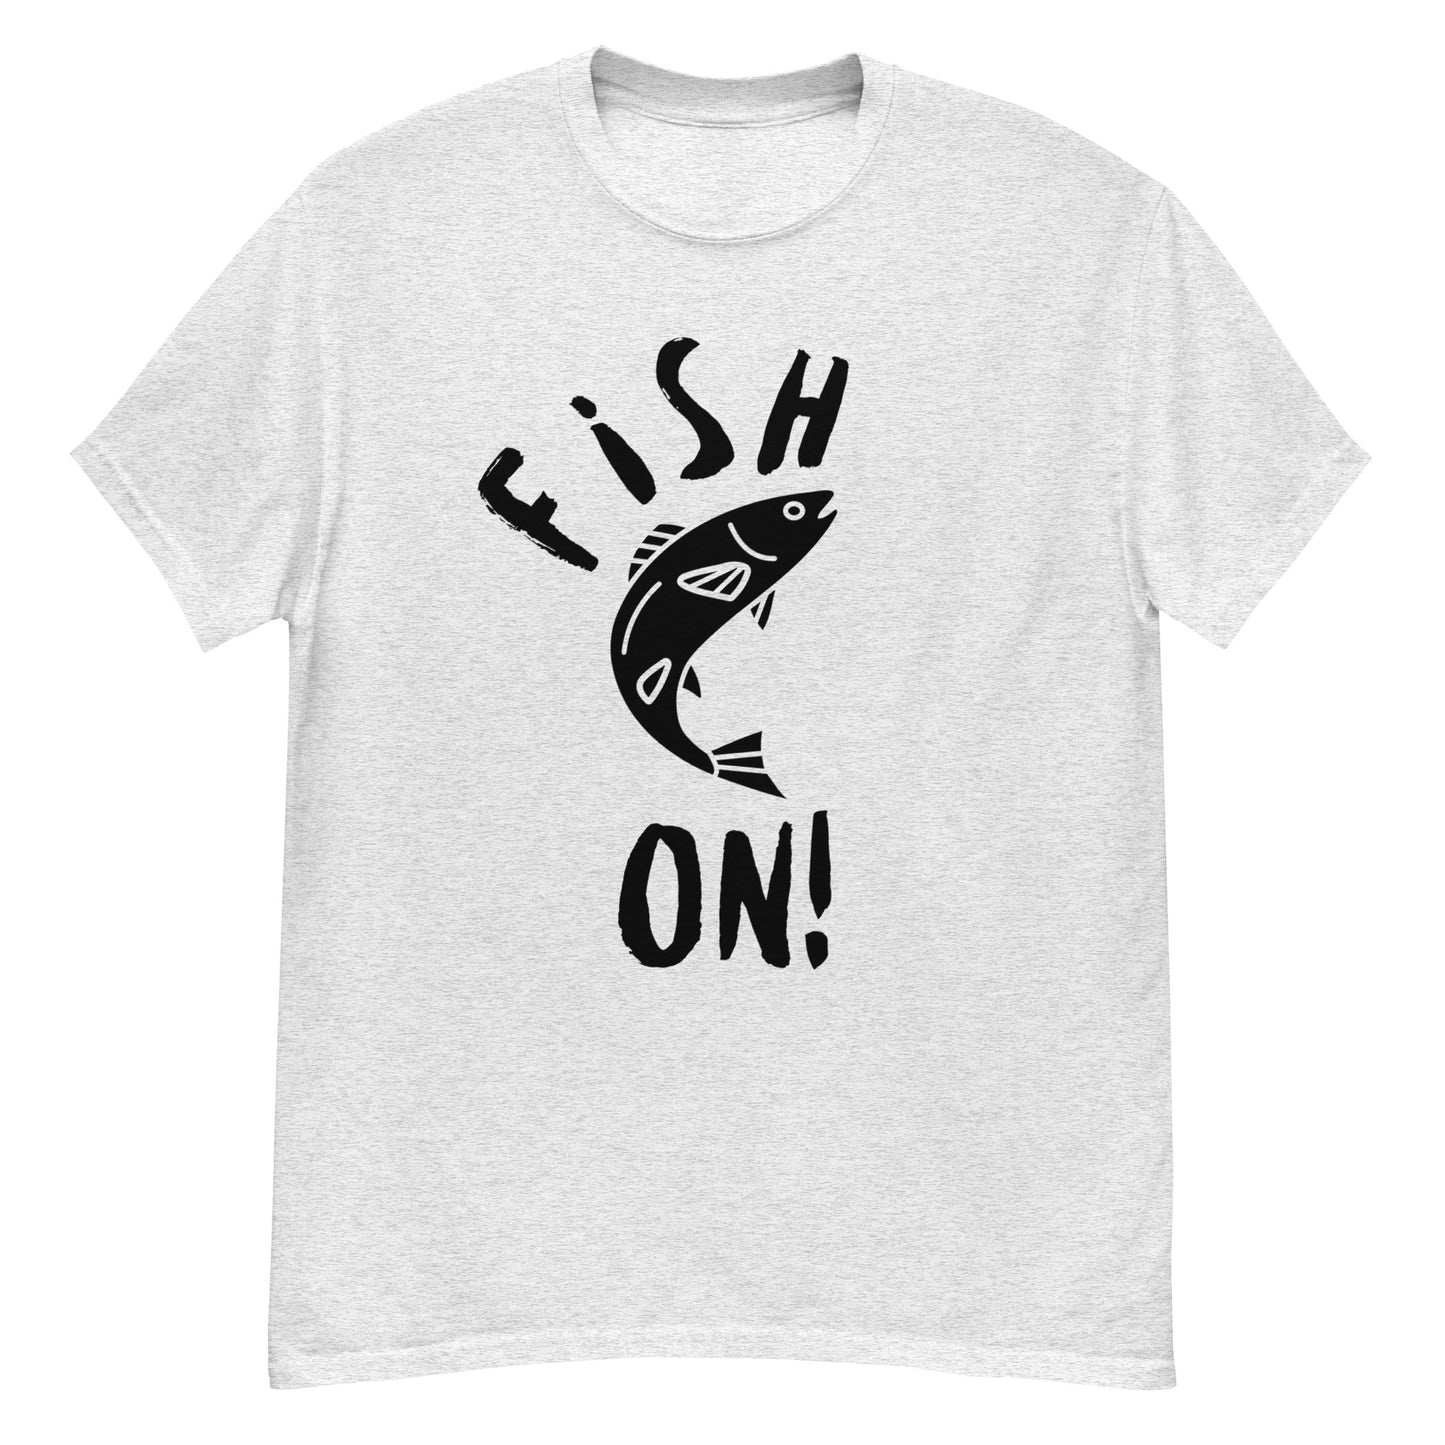 Fish on! Classic tee (black design)